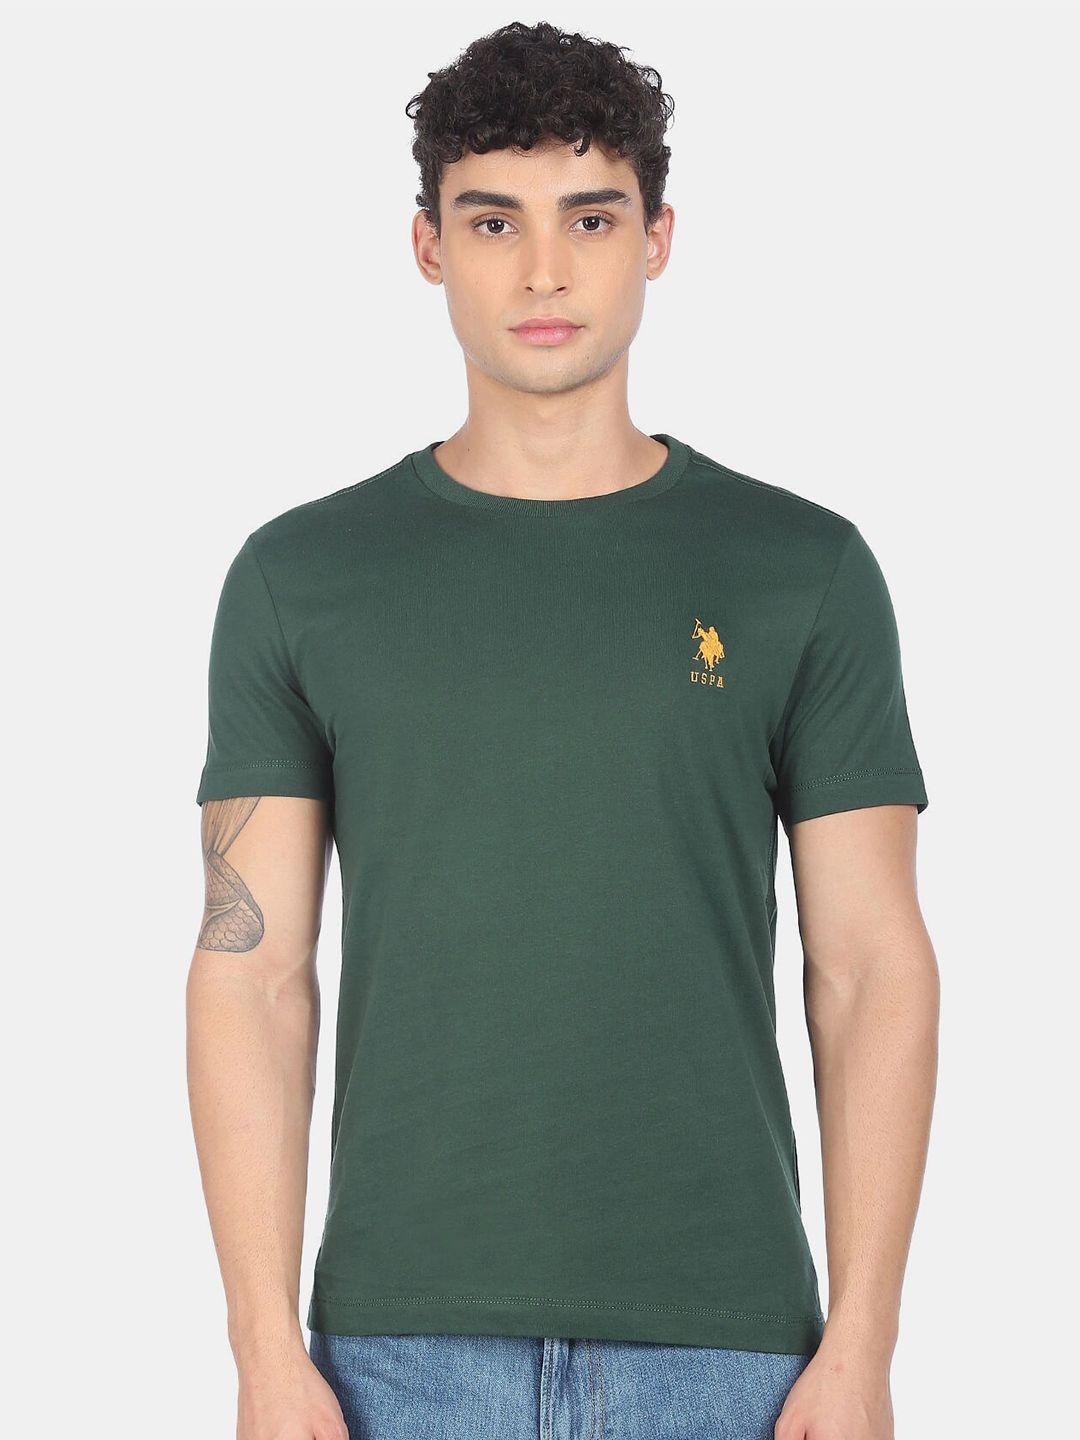 u s polo assn men green pure cotton t-shirt